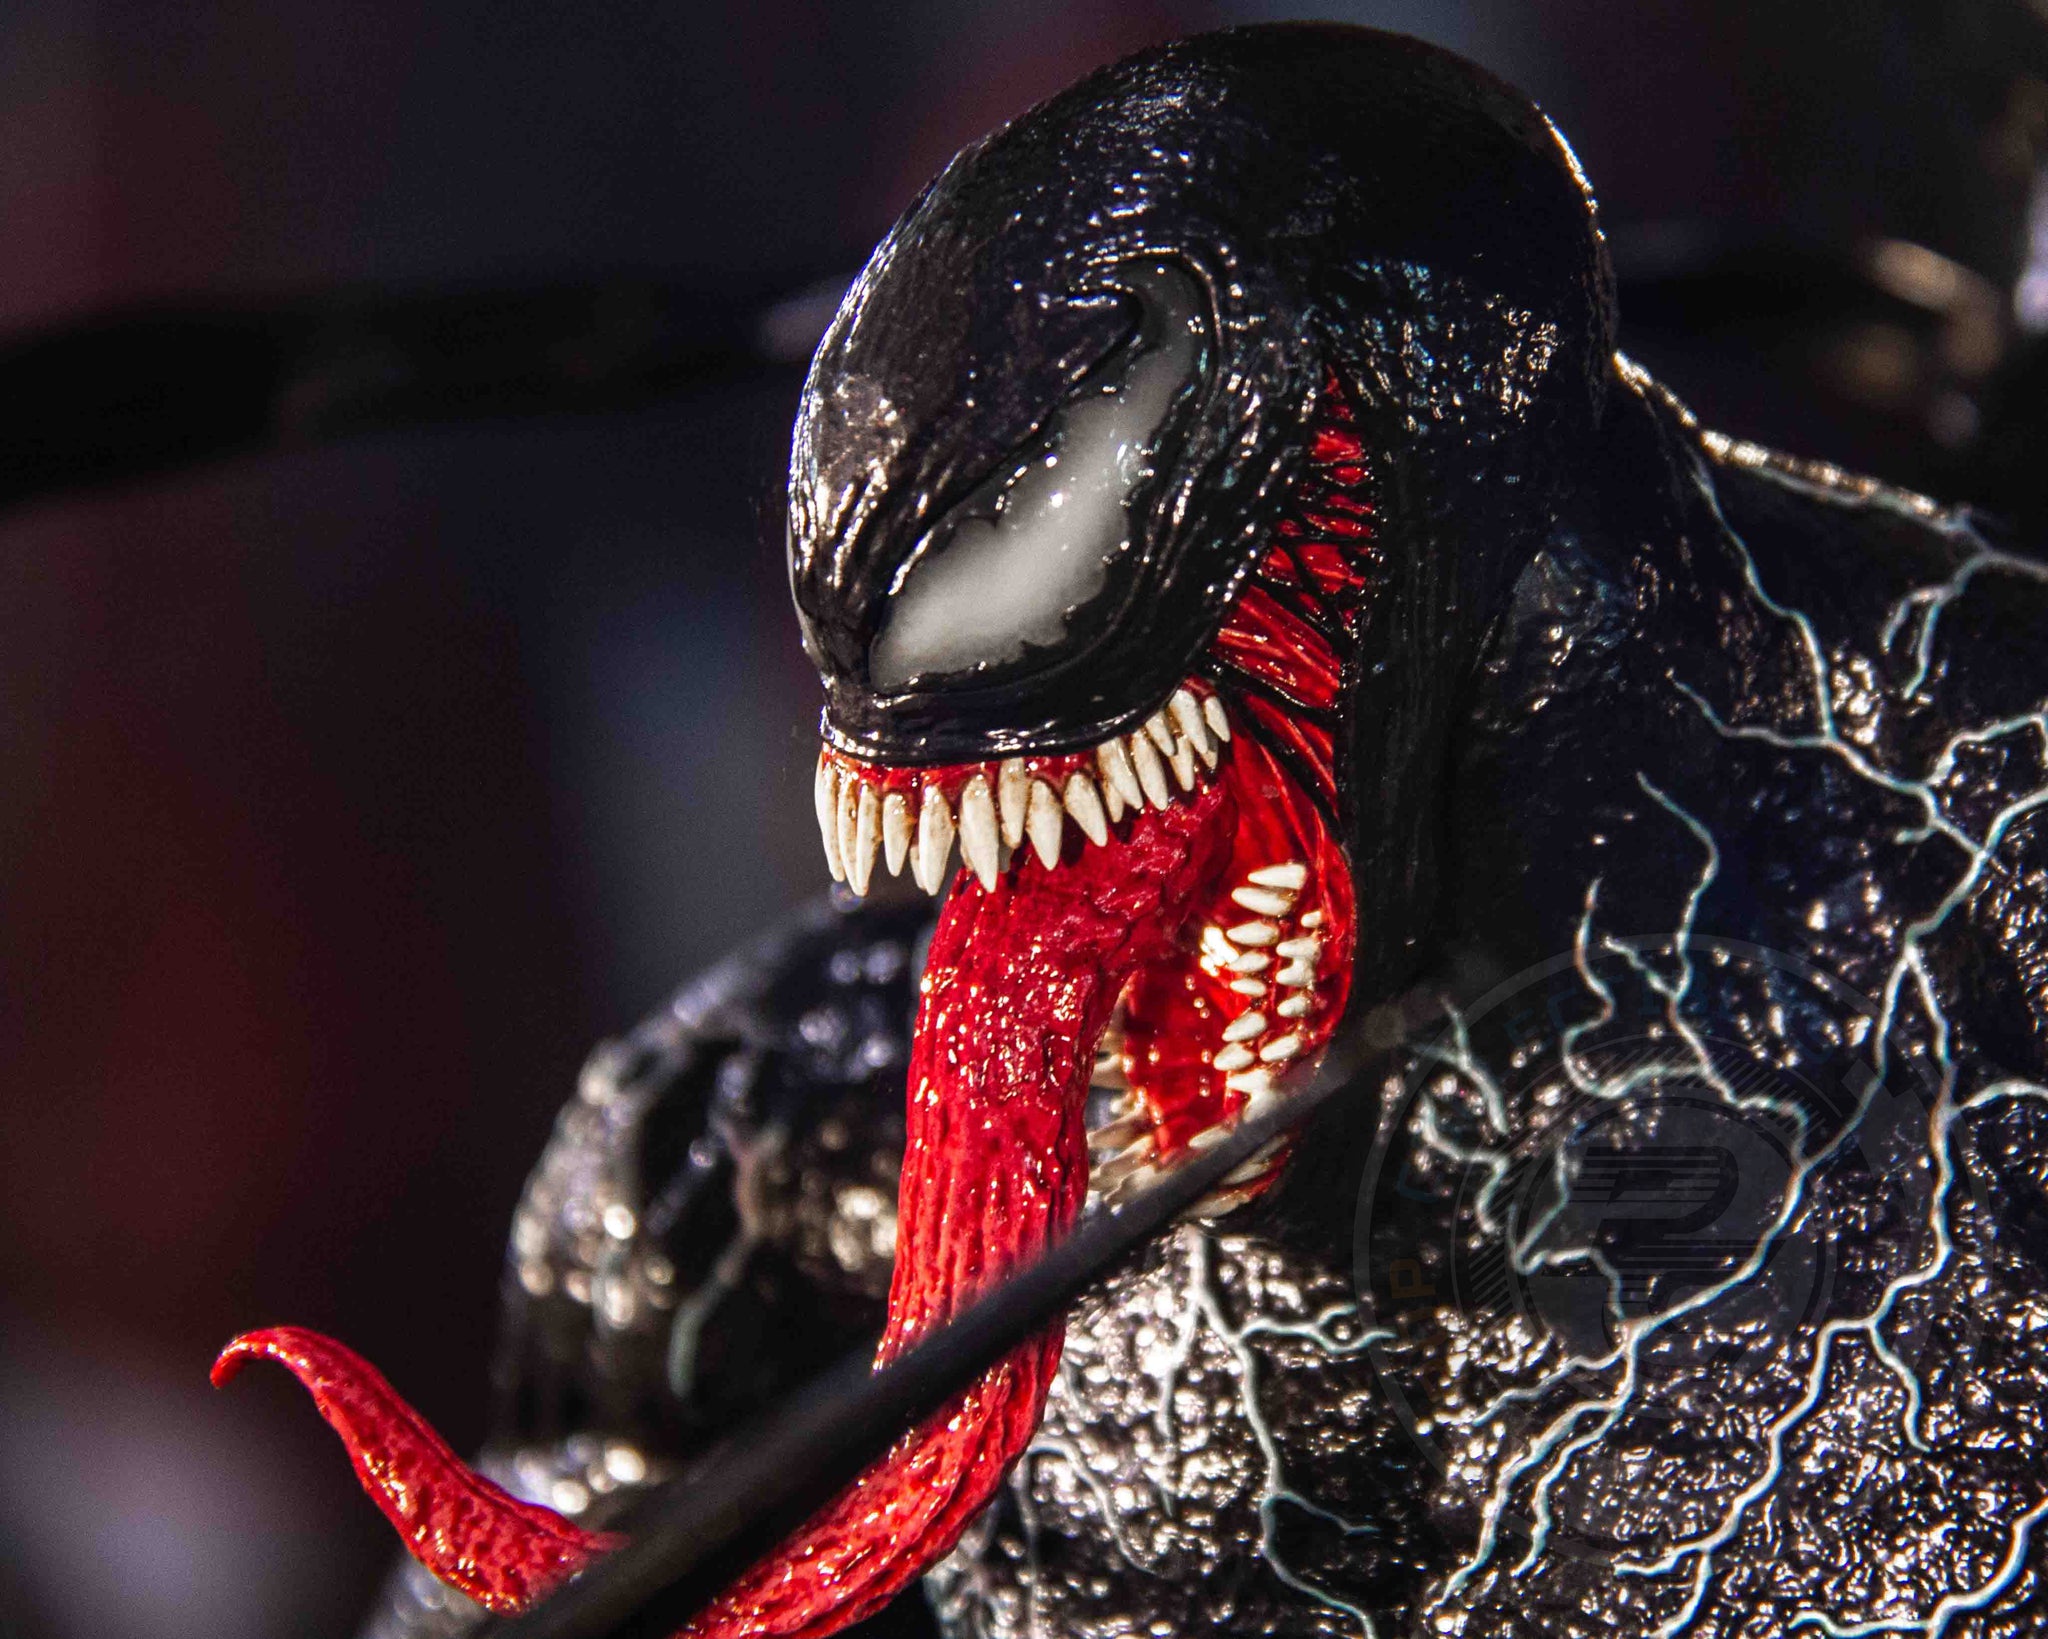 Figurine de collection Hot toys Figurine MMS590 - Marvel Comics - Venom  Standard Version